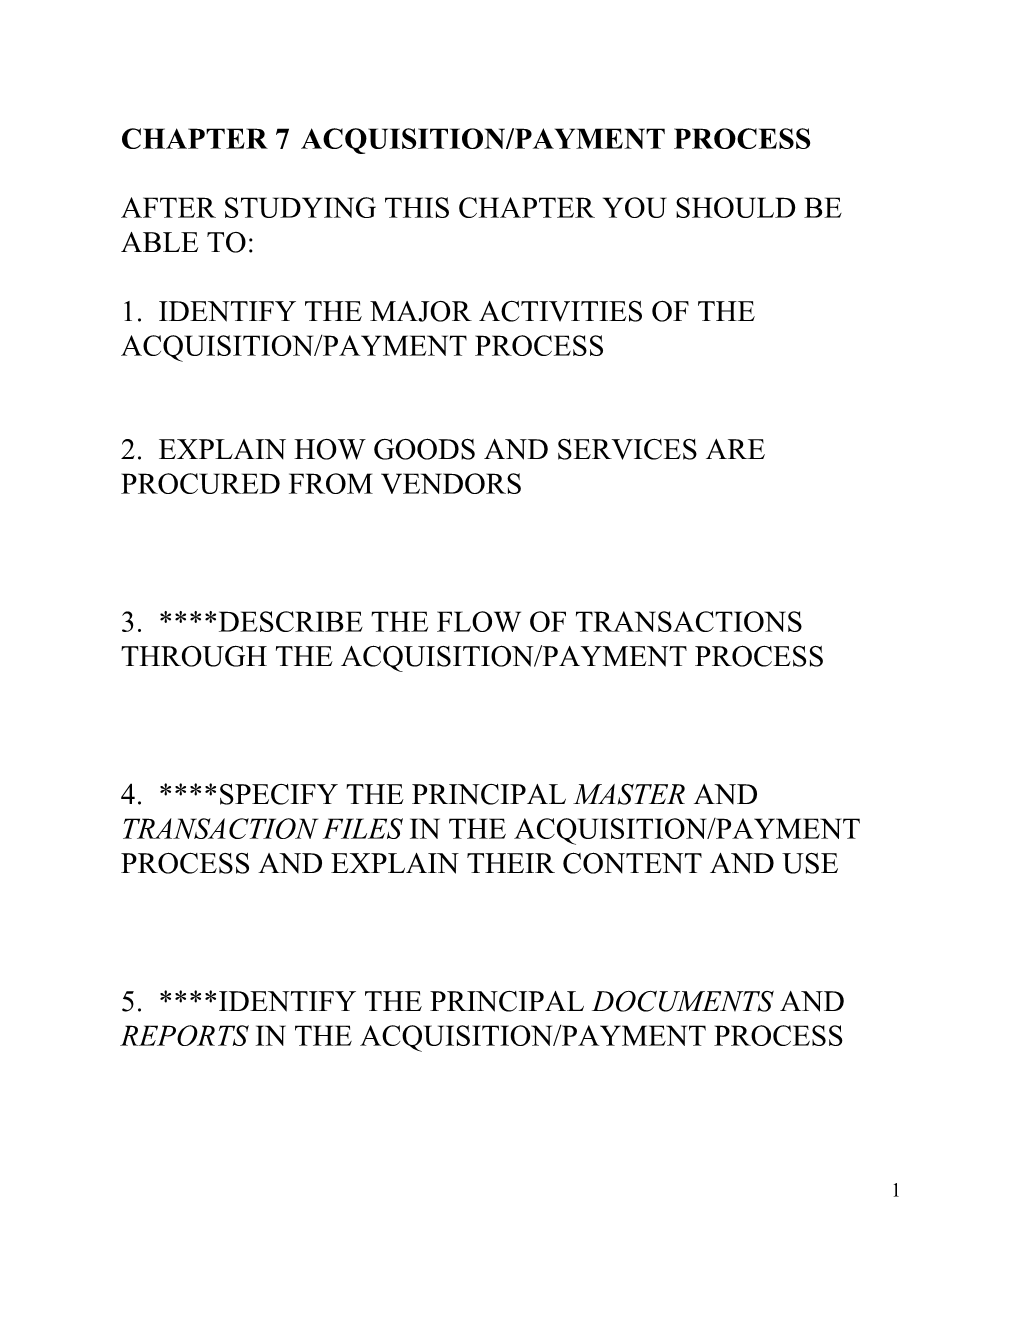 Chapter 7 Acquisition/Payment Process